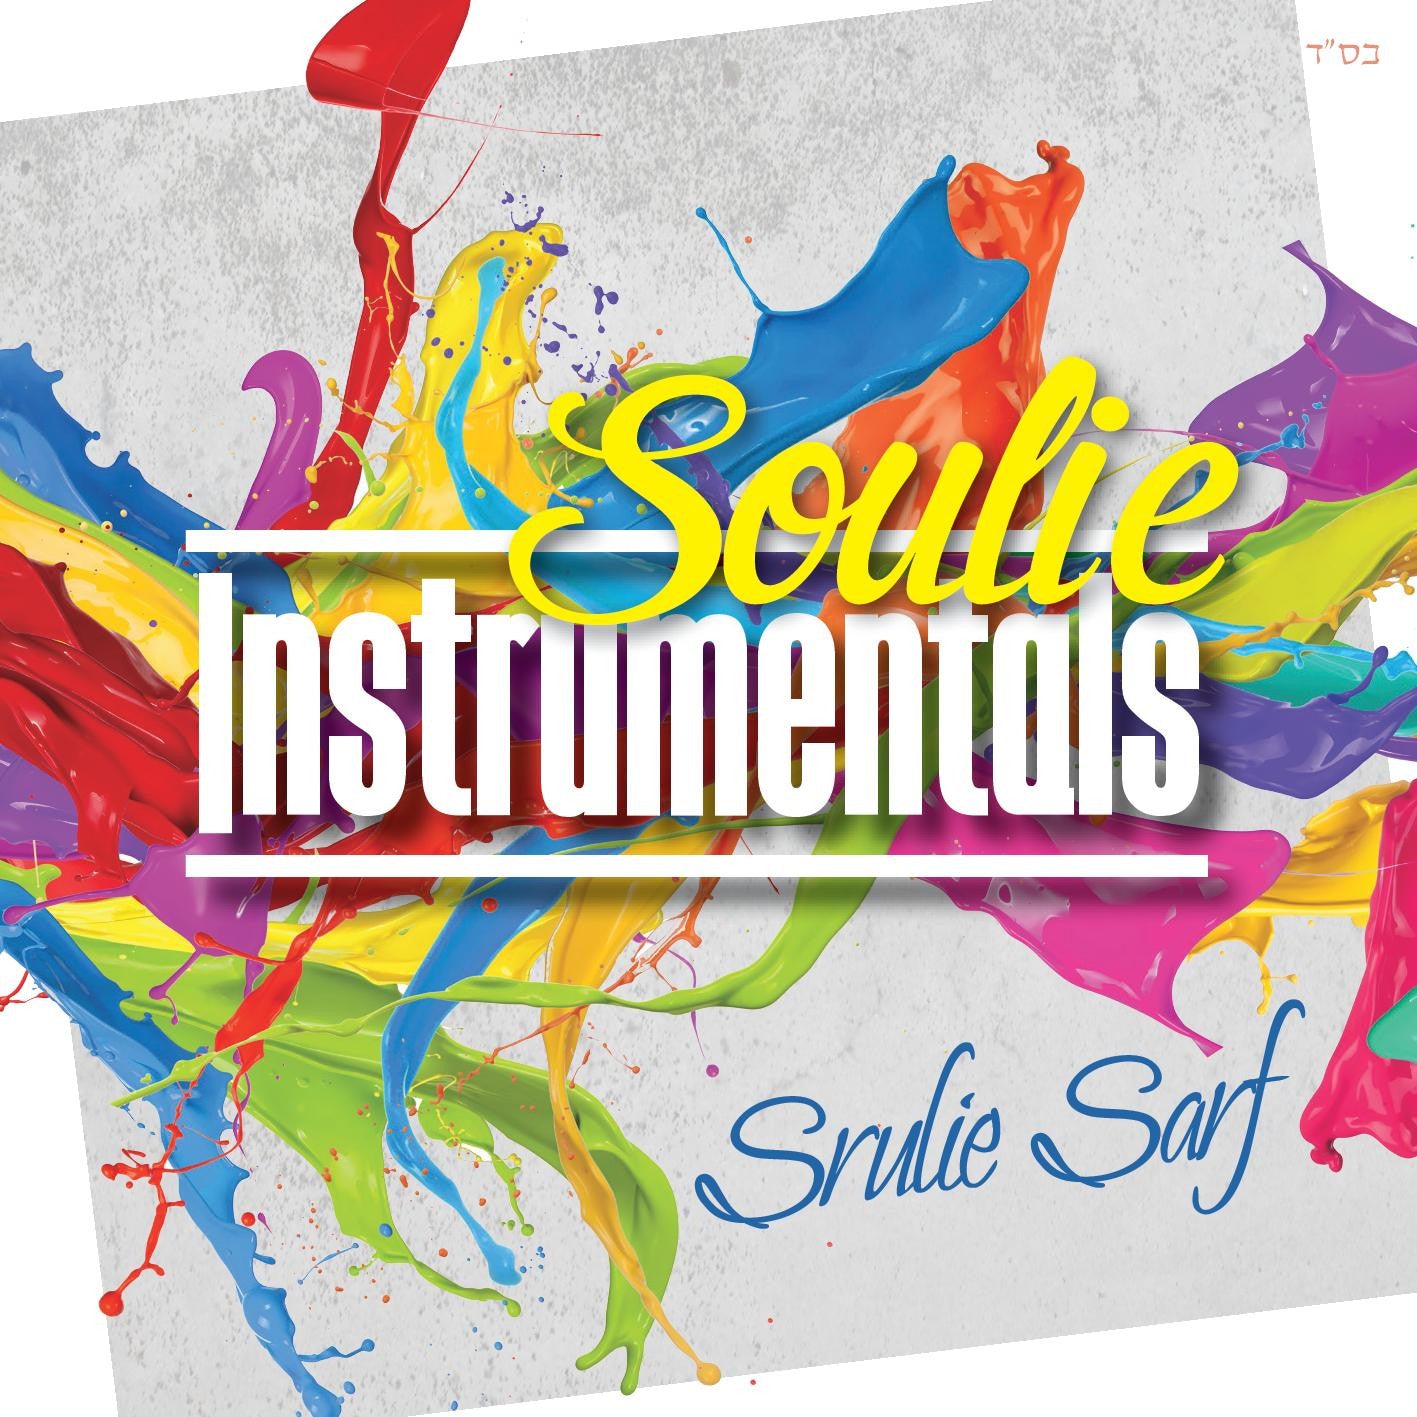 Srulie Sarf - Soulie Instrumentals